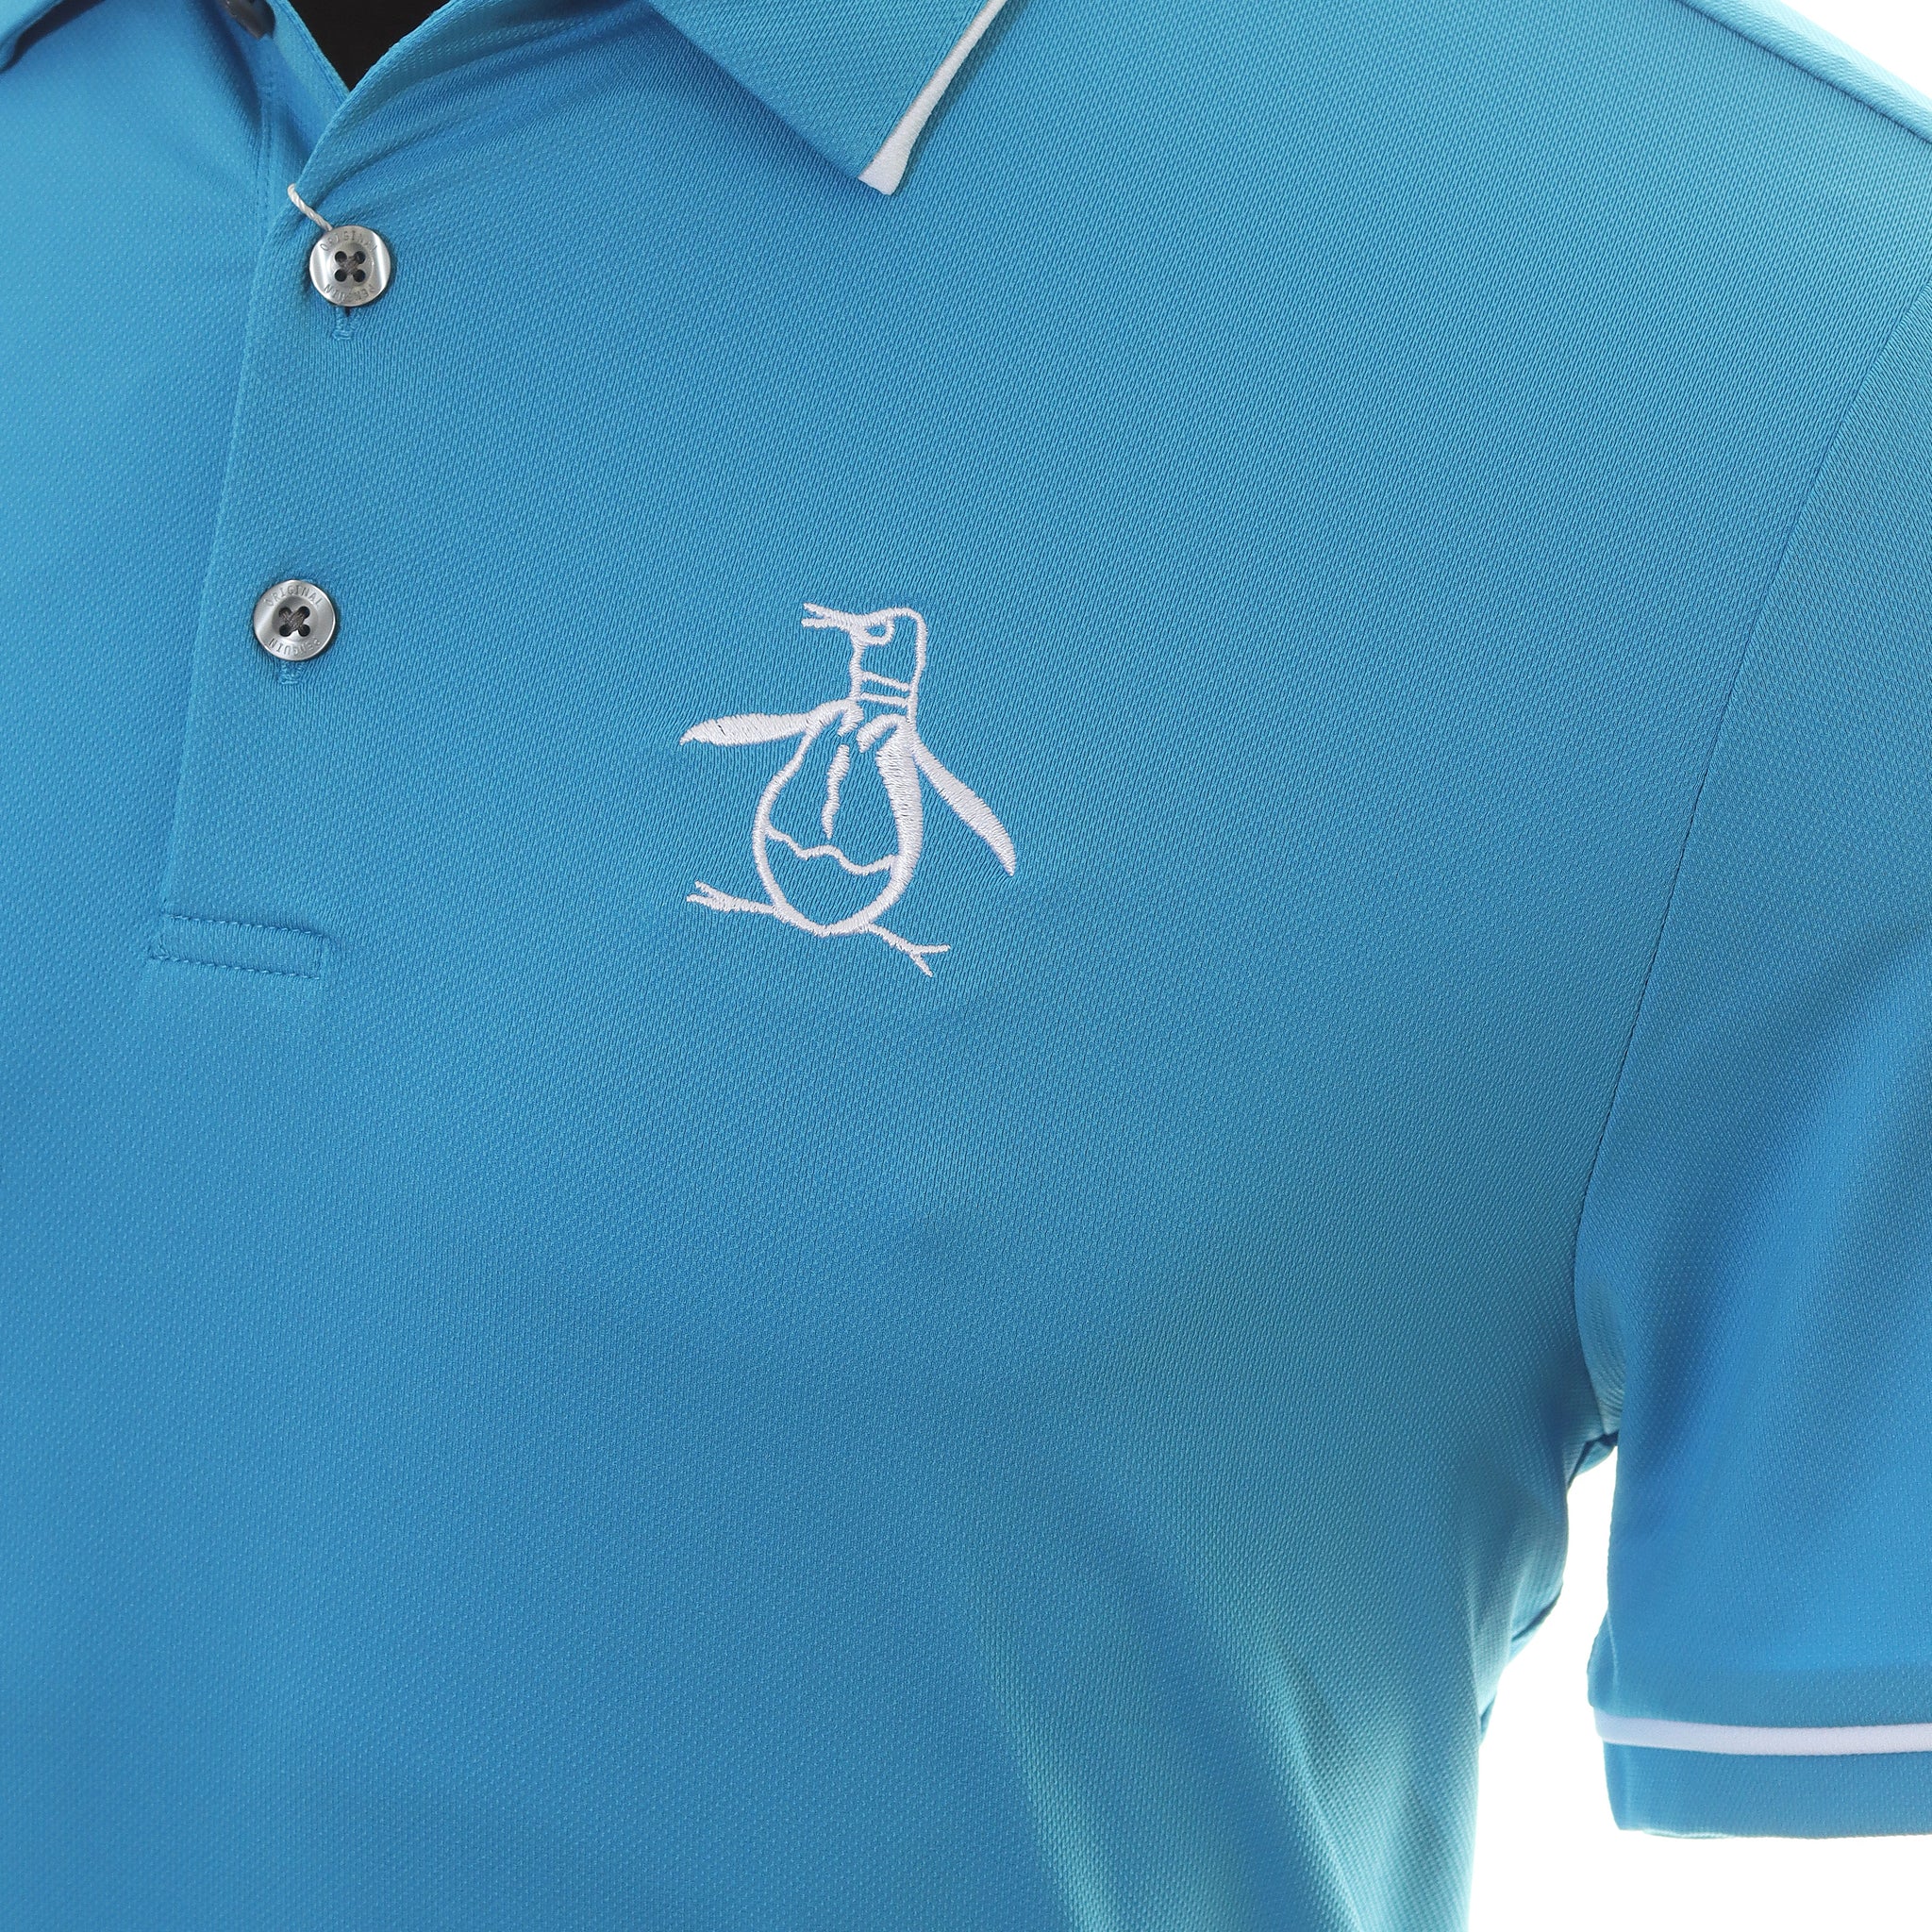 Original Penguin Golf Heritage Polo Shirt OGKSD008 Mediterrainian Blue ...